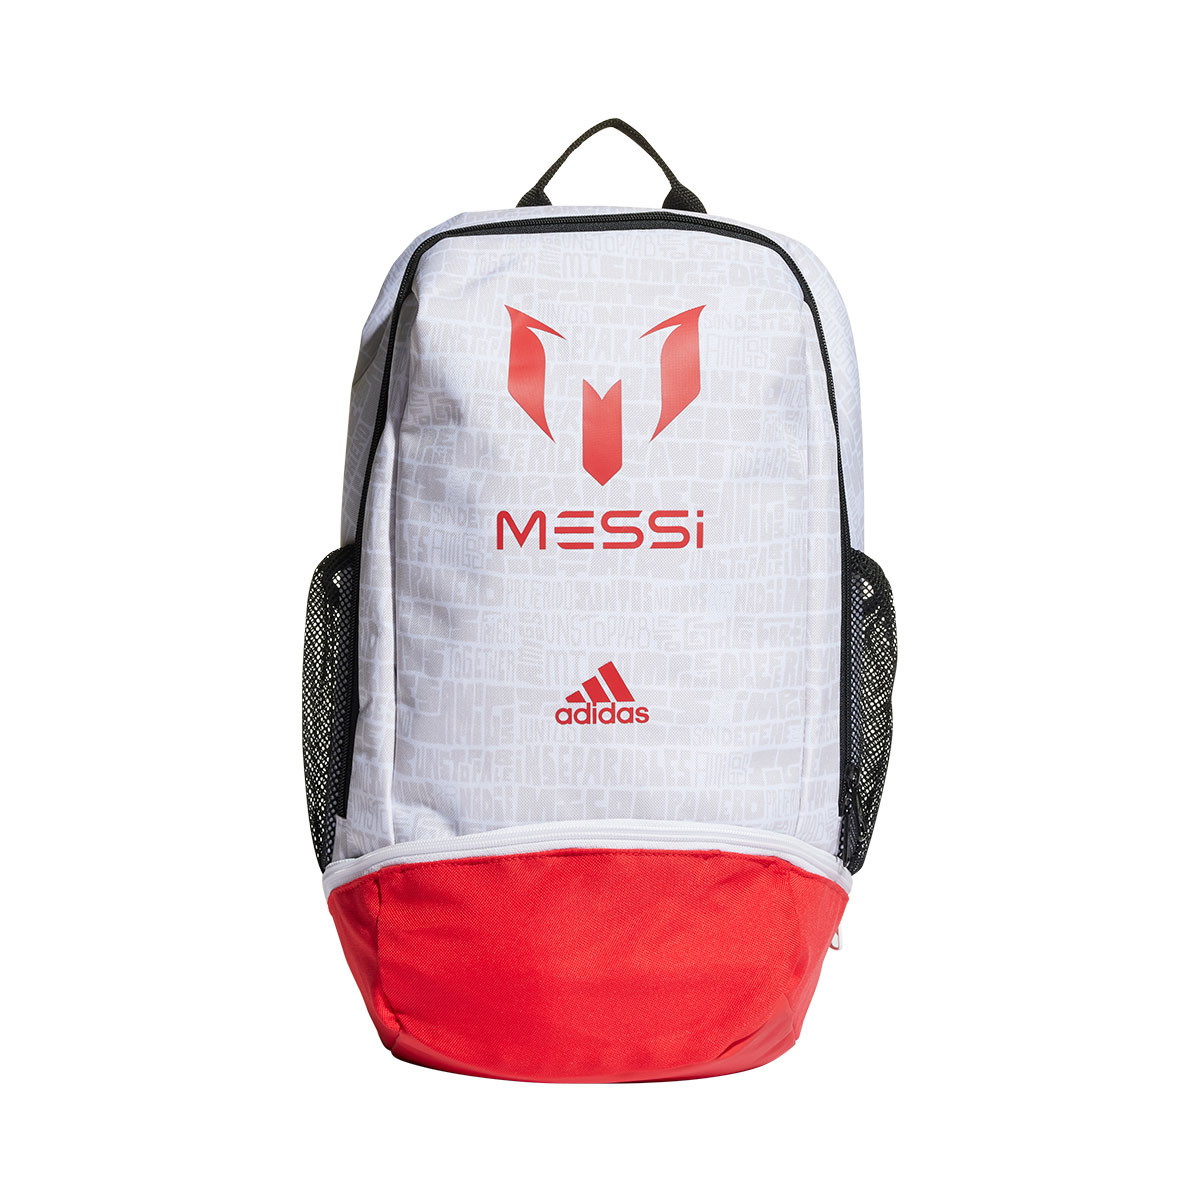 Oxido sugerir Subrayar Mochila adidas Messi Backpack White-Black-Vivid Red - Fútbol Emotion